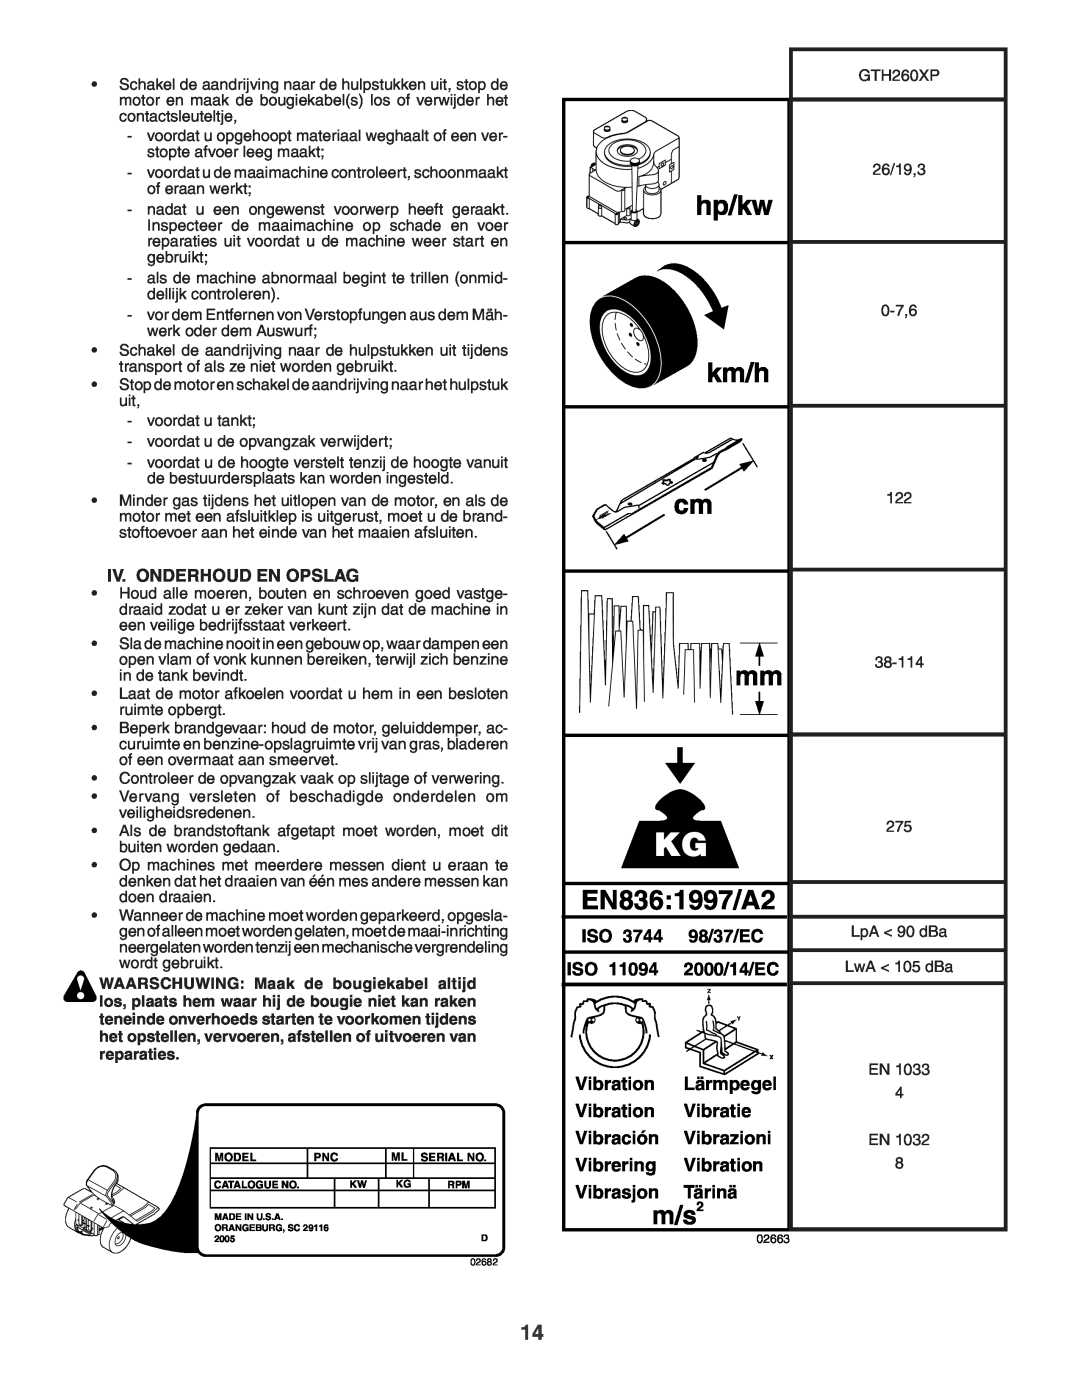 Husqvarna GTH260XP instruction manual EN8361997/A2, m/s2 